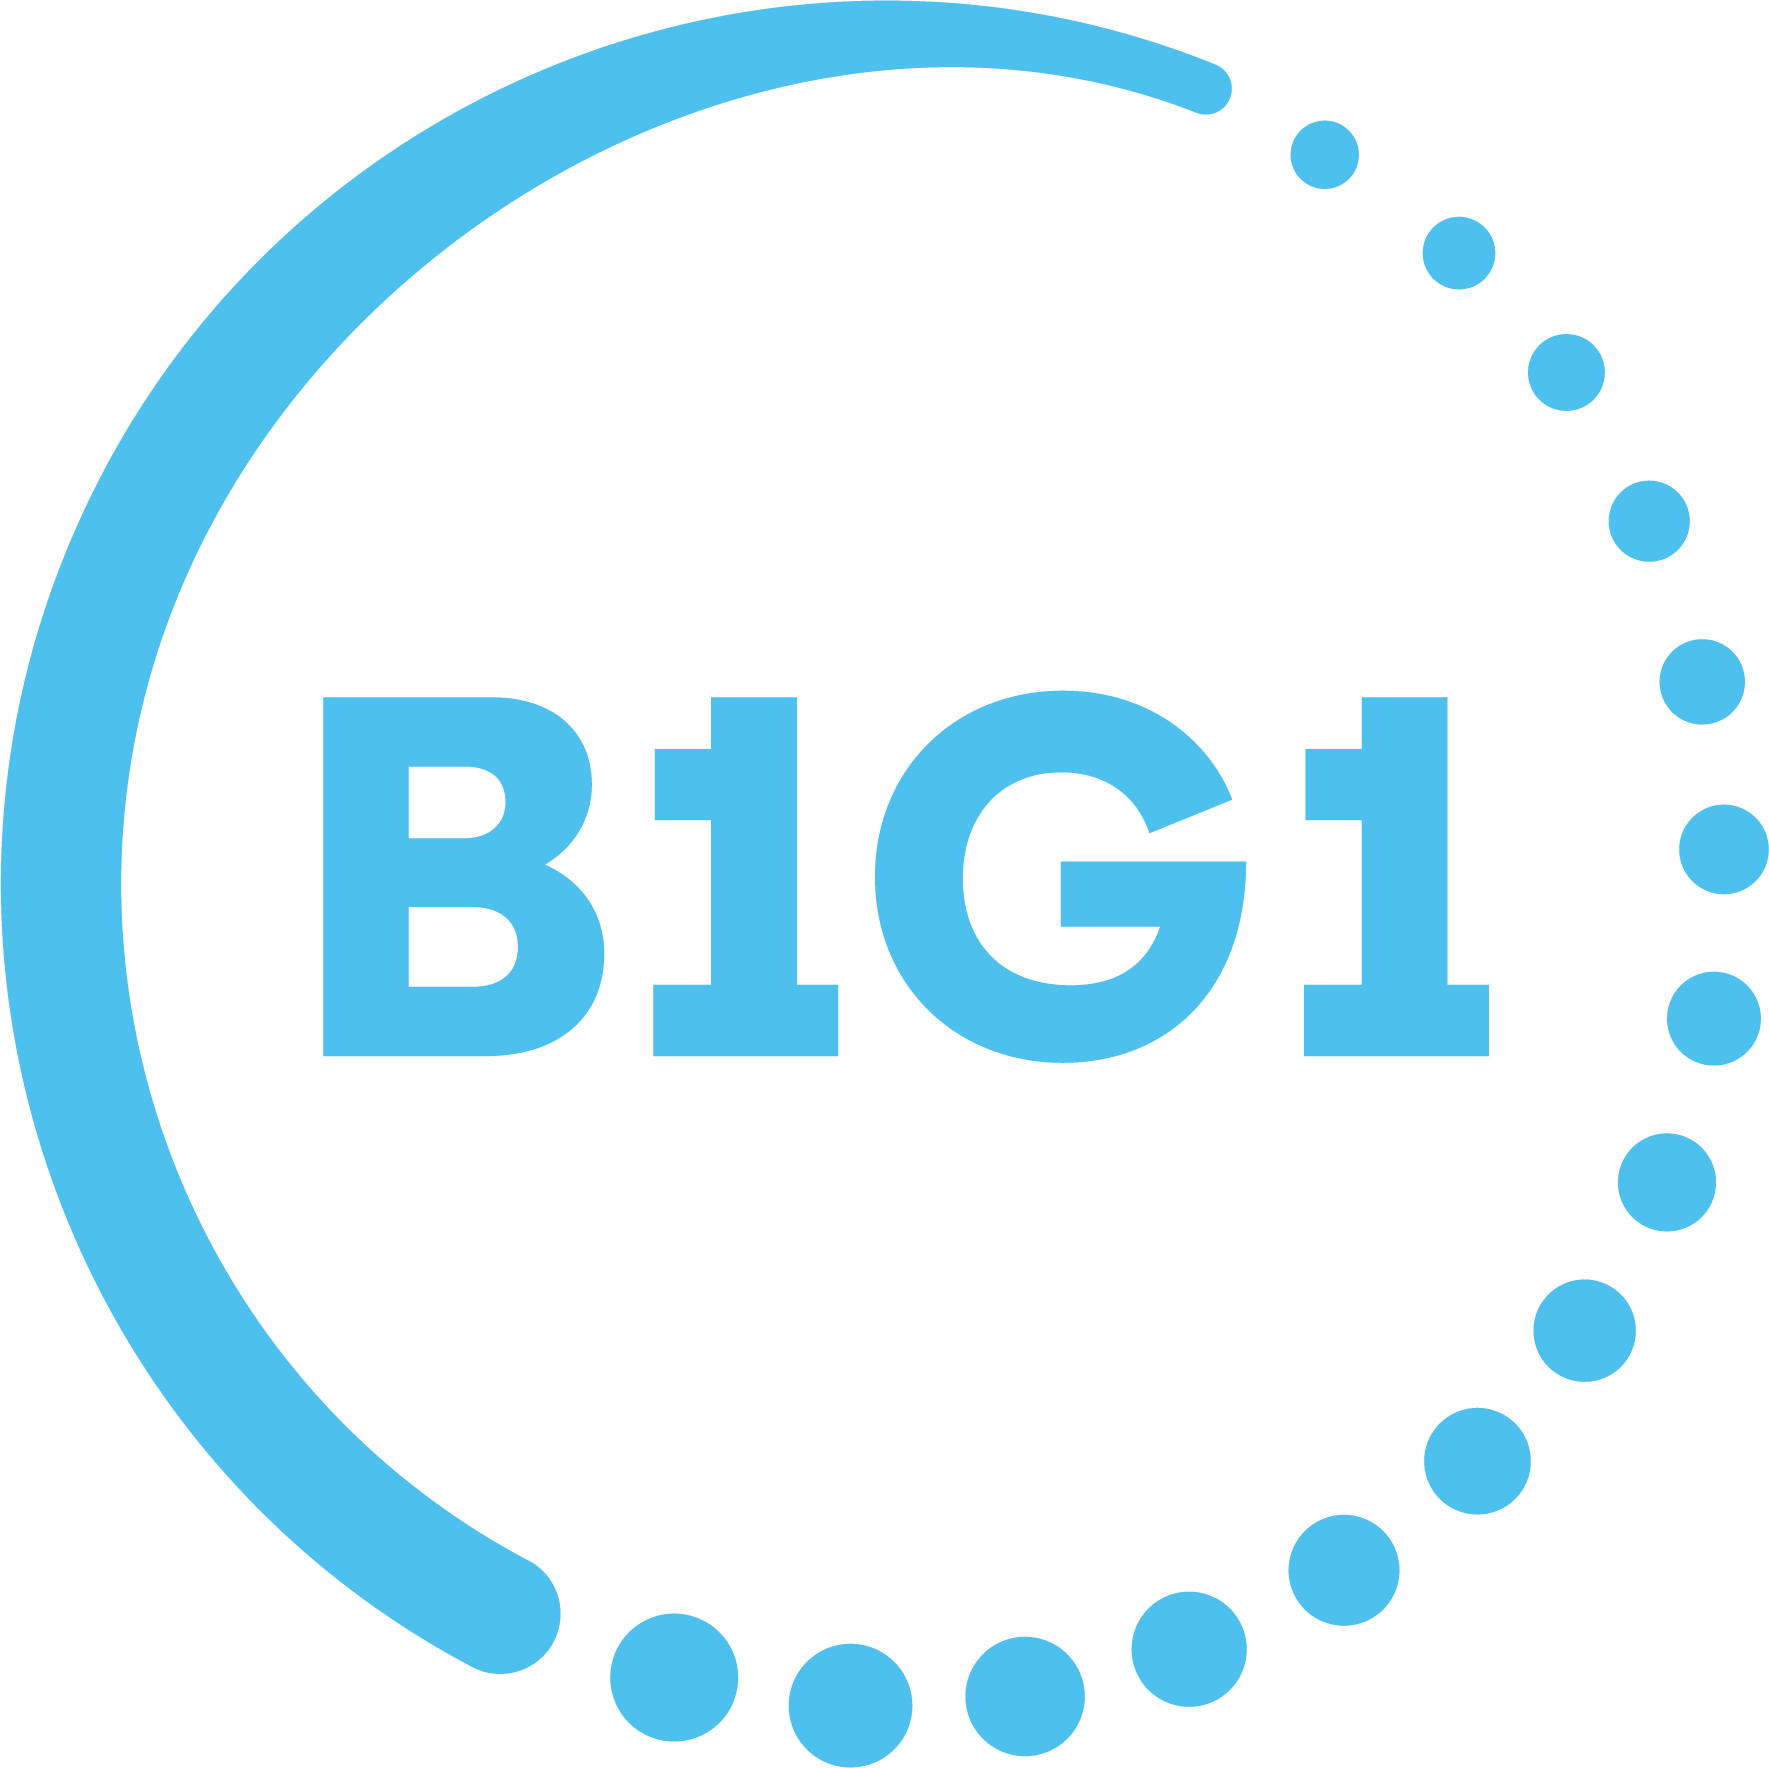 B1g1 logo b1g1 primary cyan 02 1